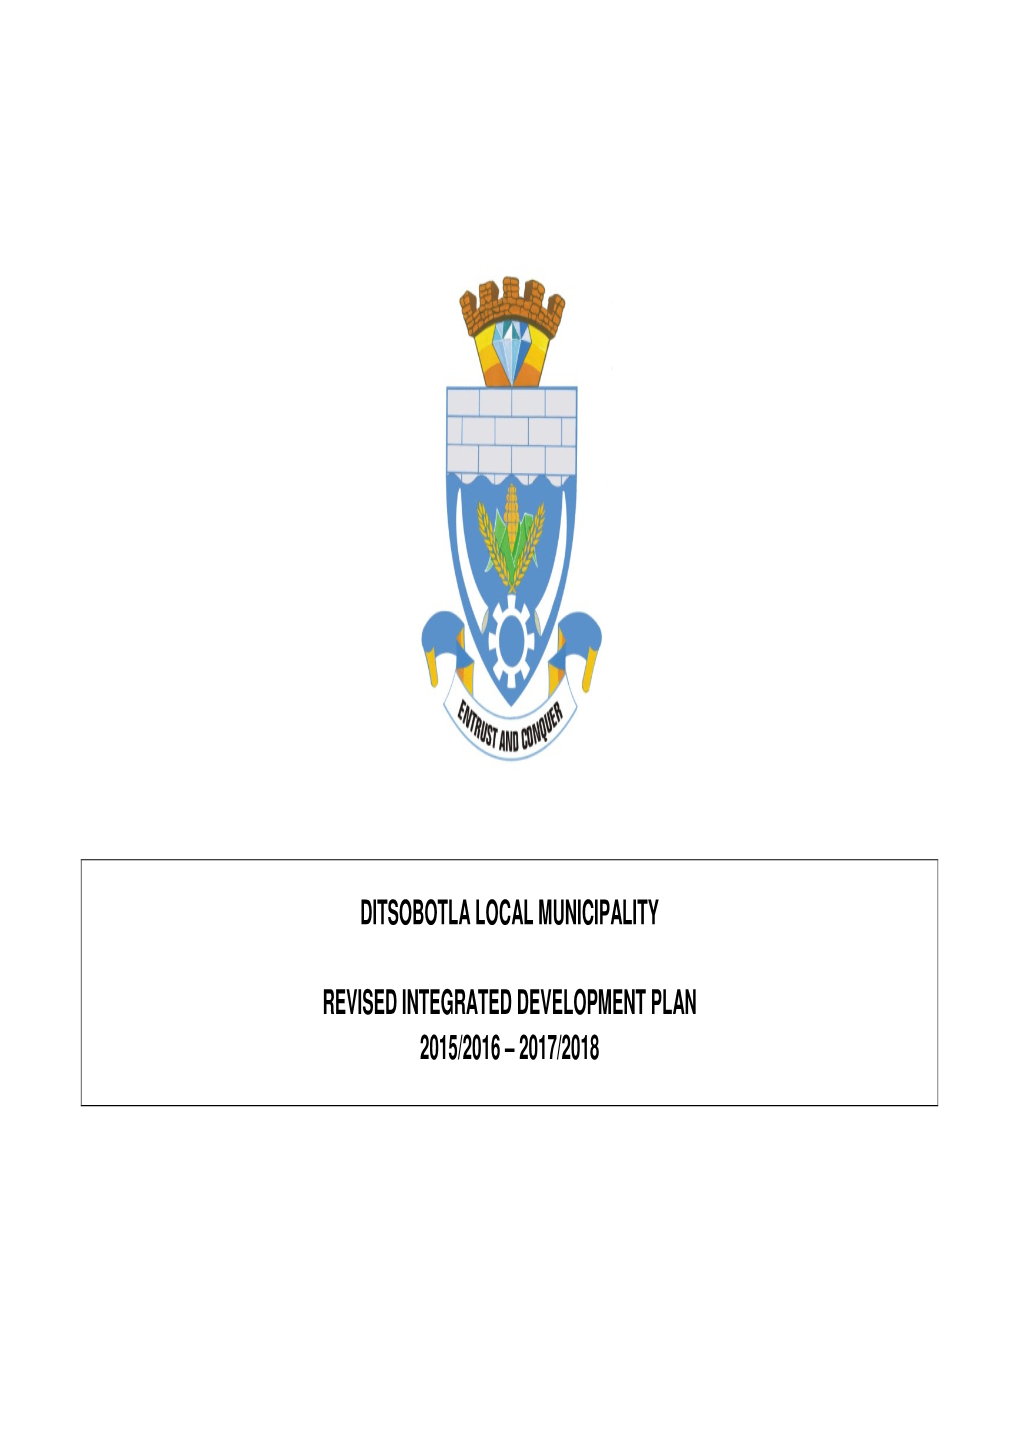 Ditsobotla Local Municipality Revised Integrated